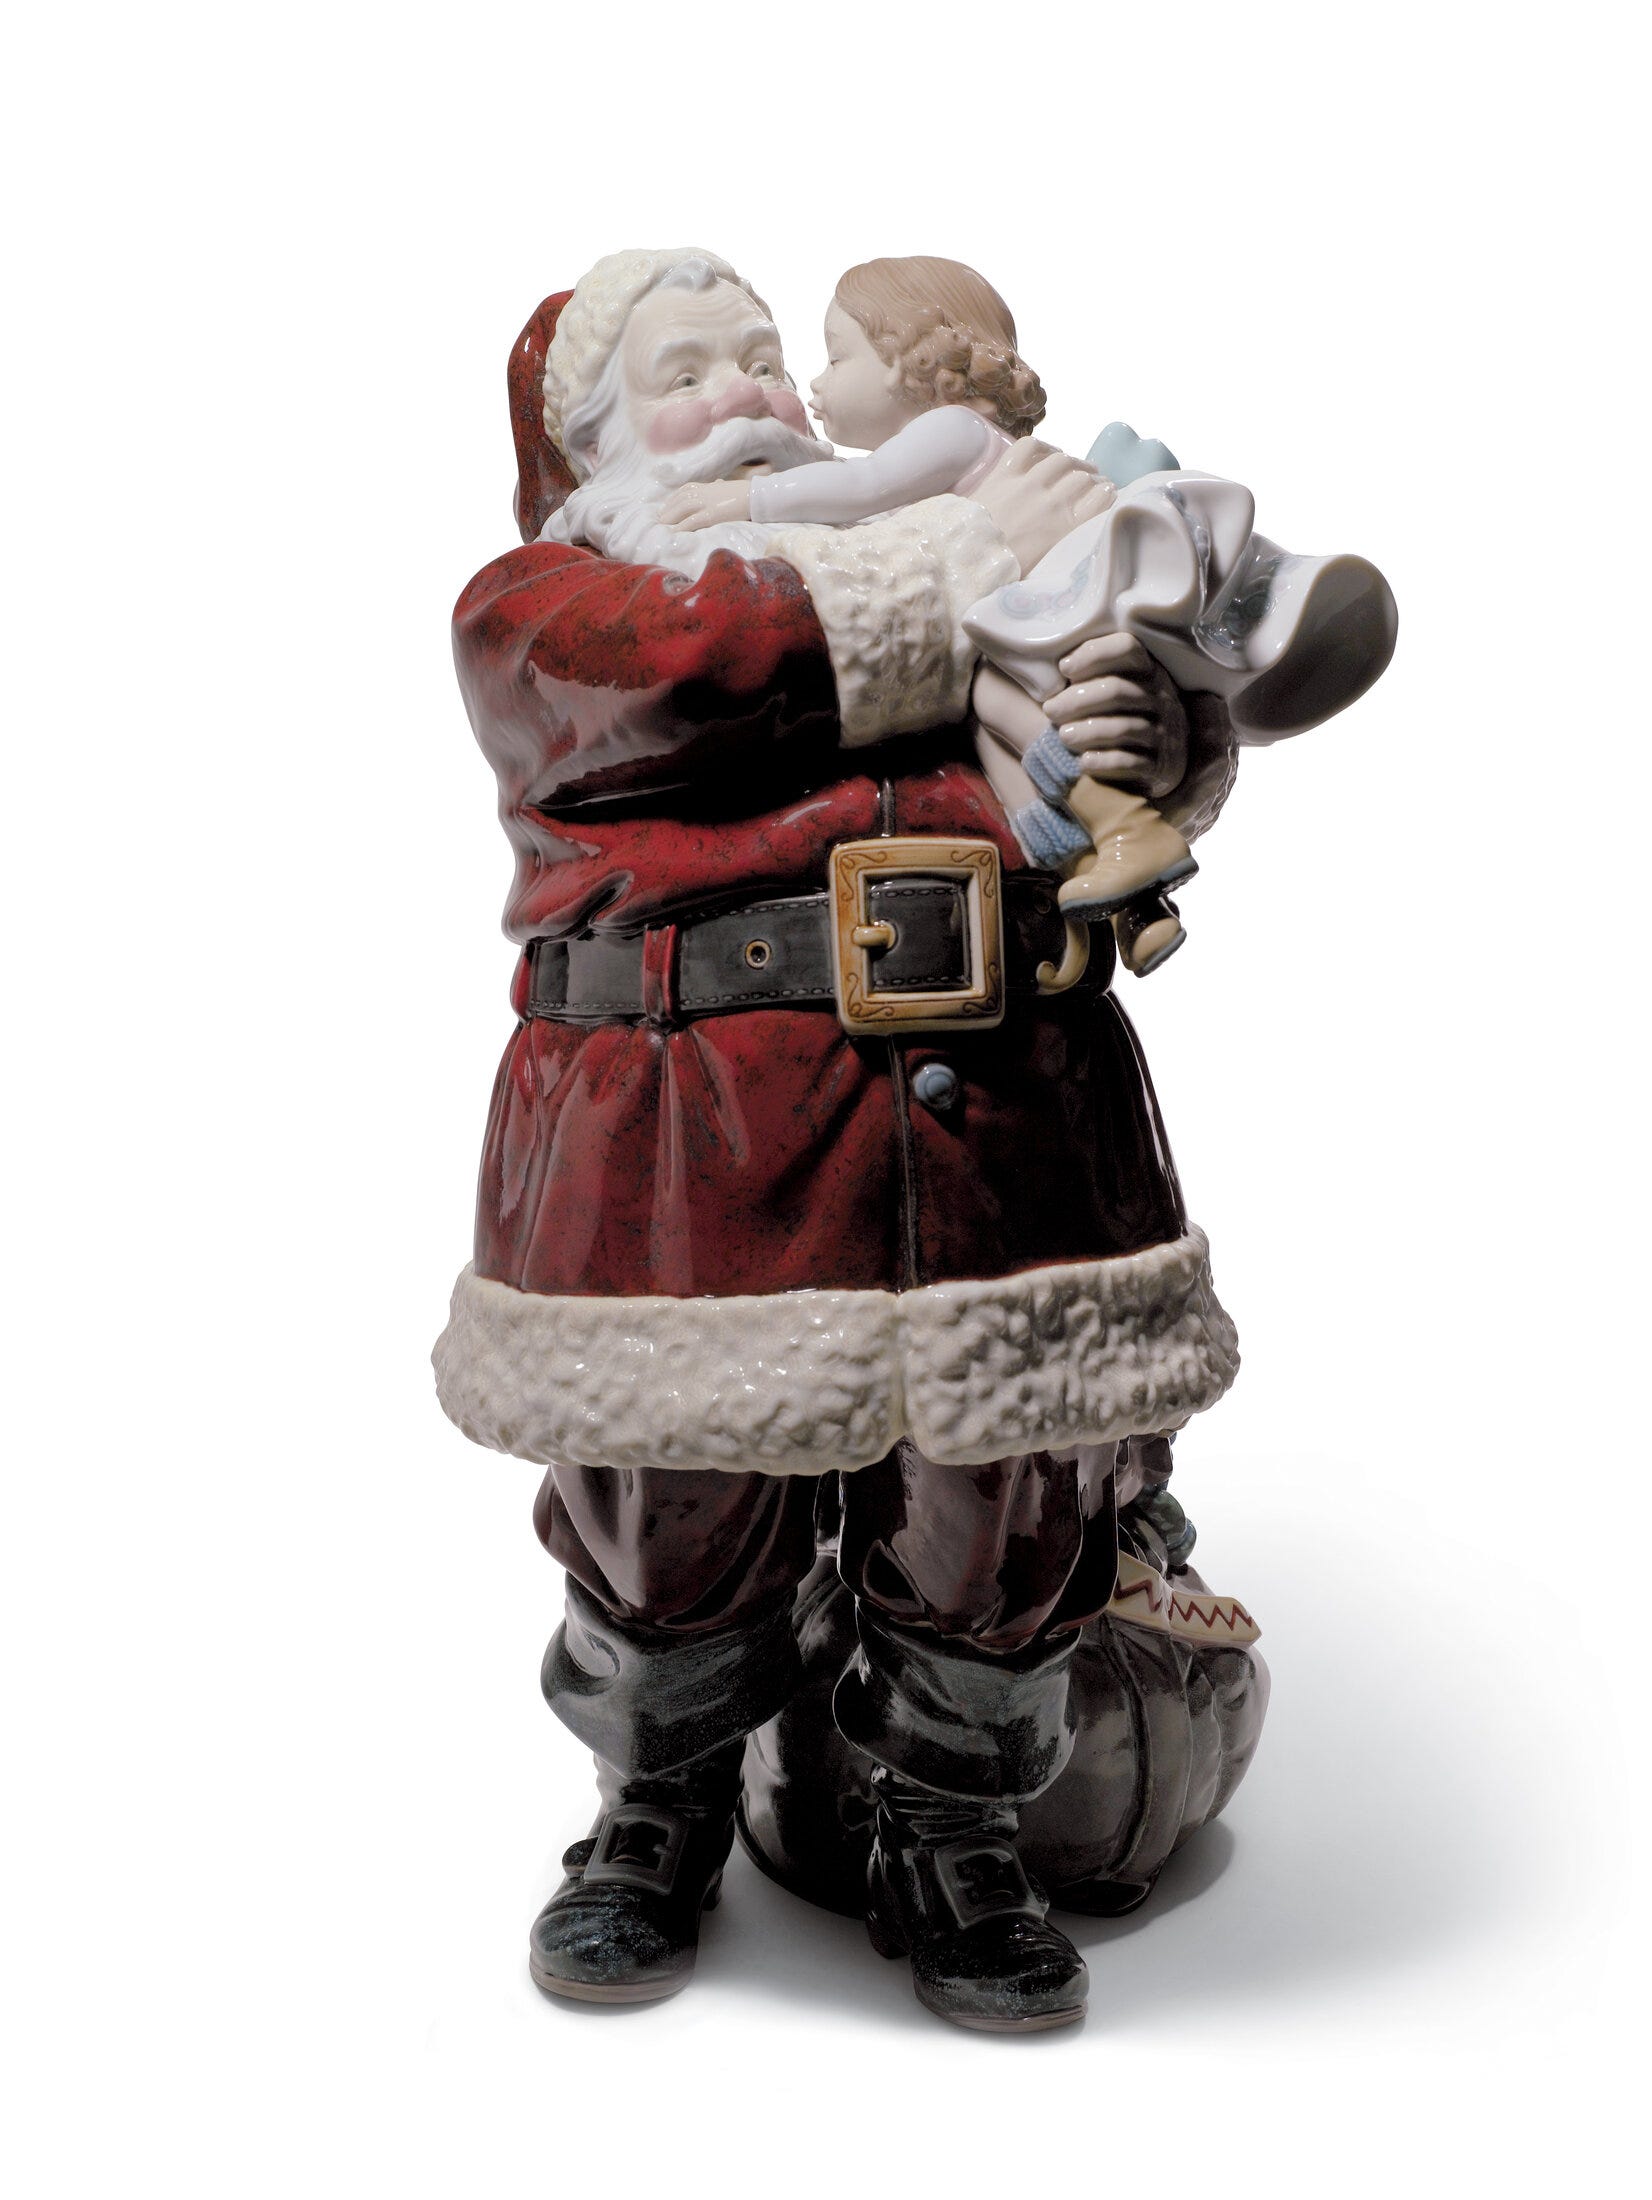 Santa I've Been Good! Figurine. Limited Edition